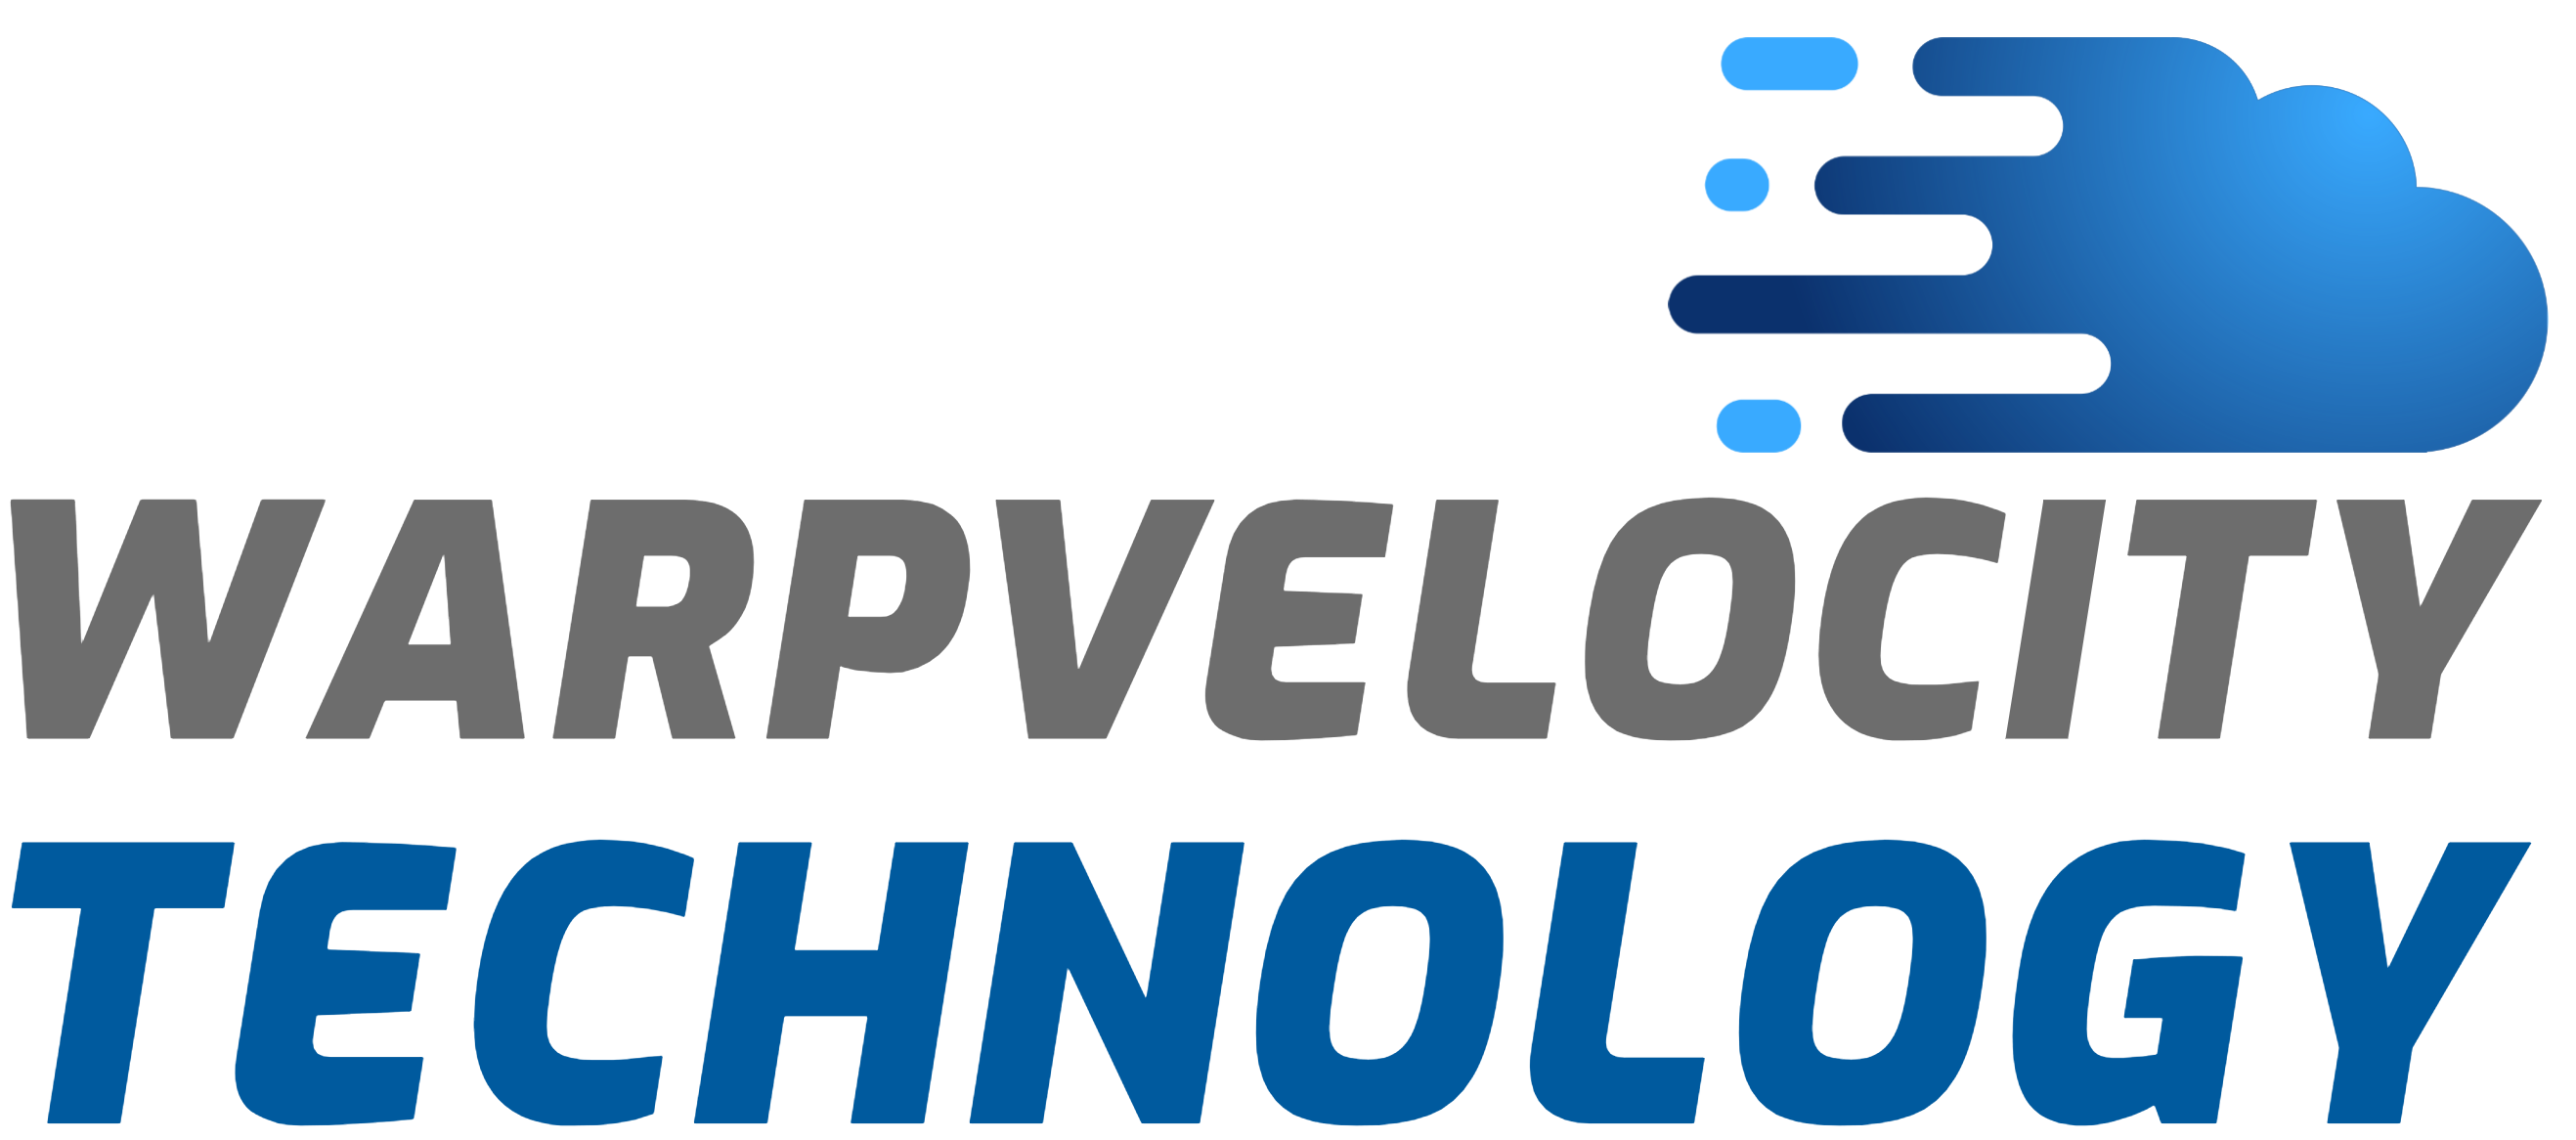 WarpVelocity Technology